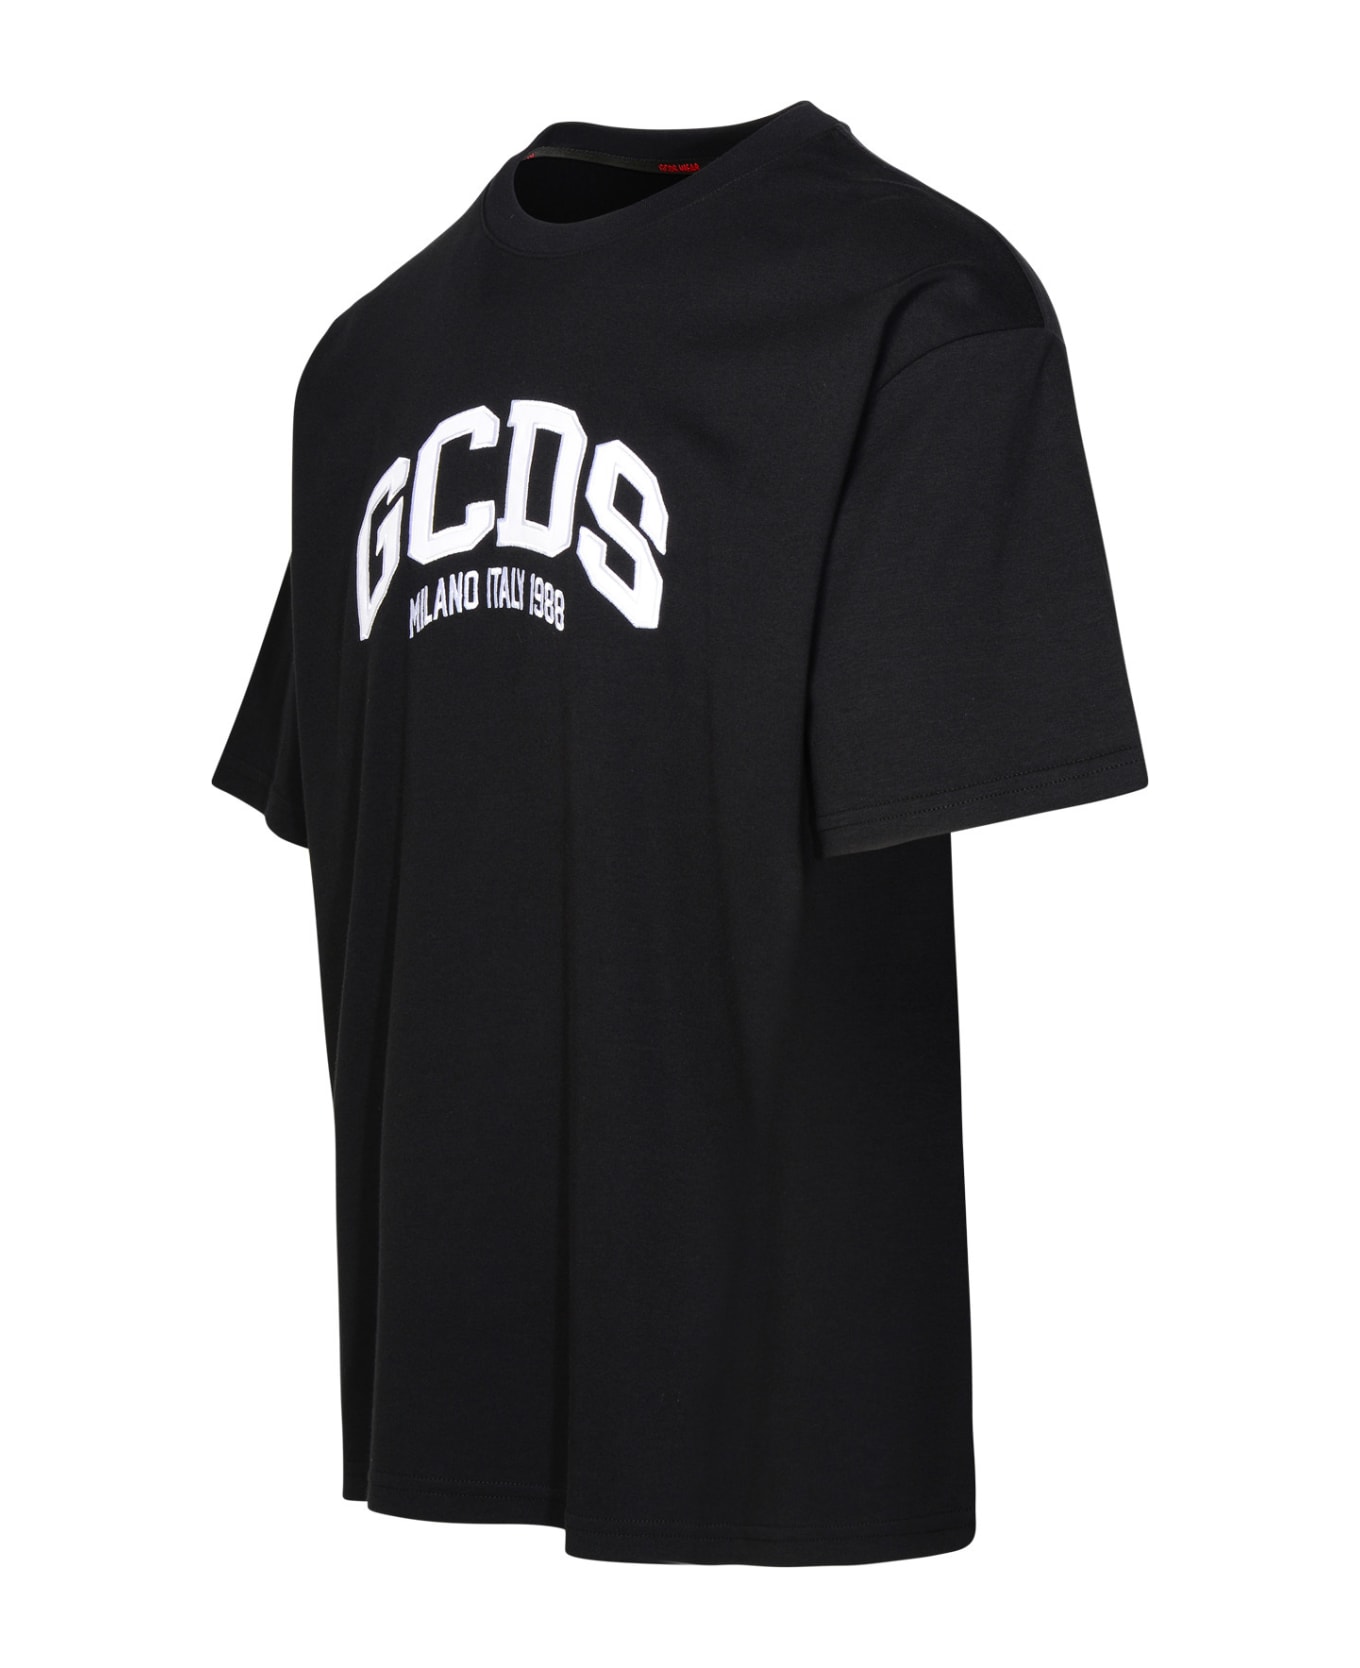 GCDS Black Cotton T-shirt - BLACK